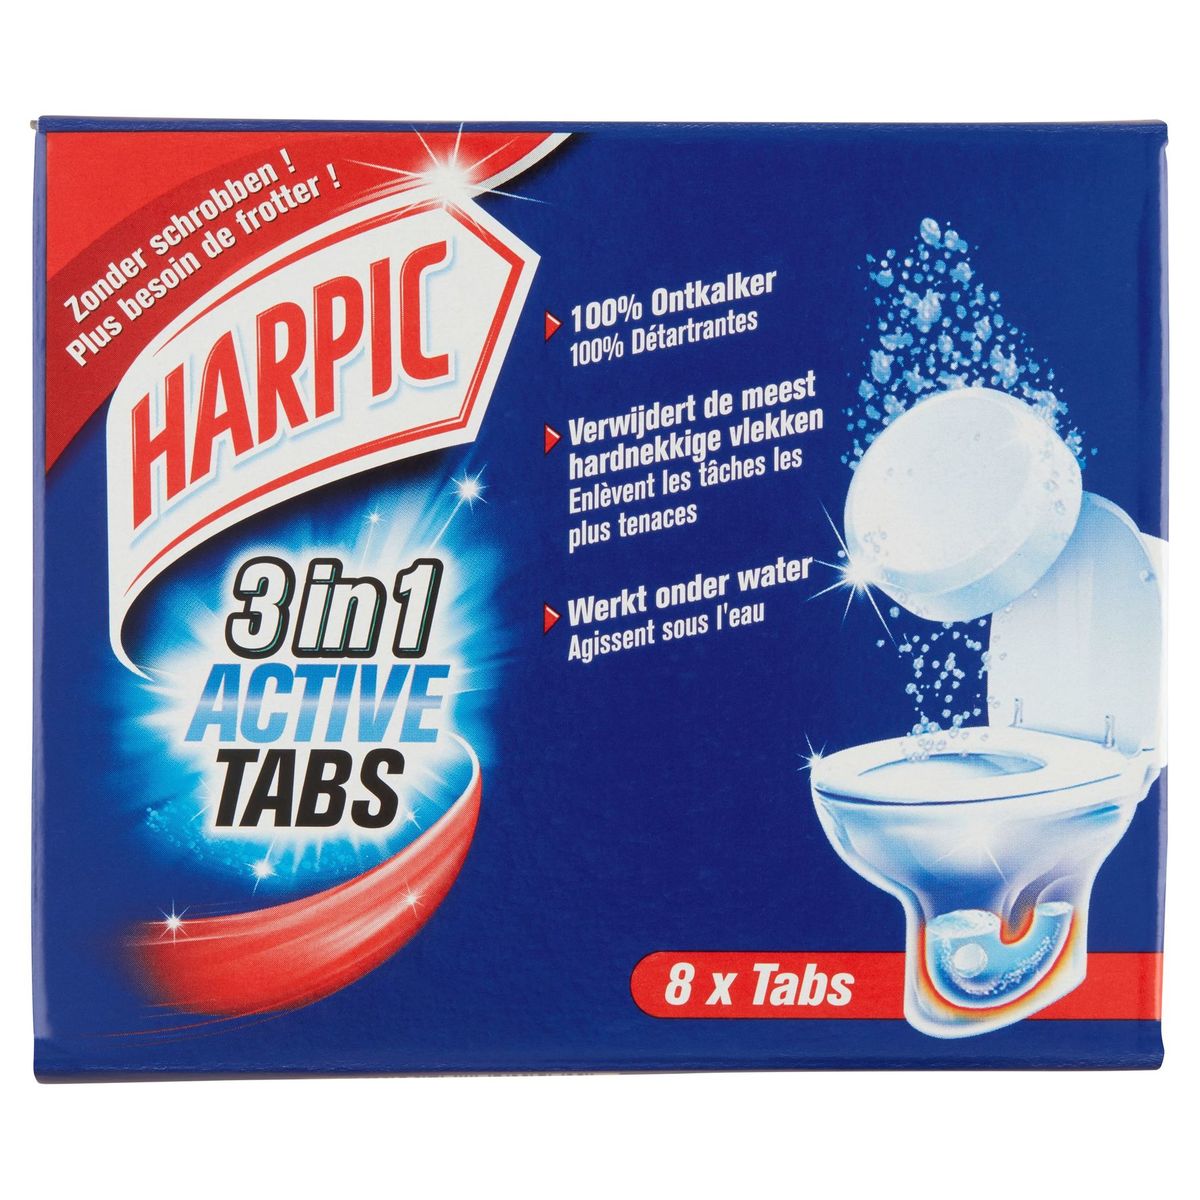 Harpic 3 in 1 Active Tabs 8 x Tabs 200 g